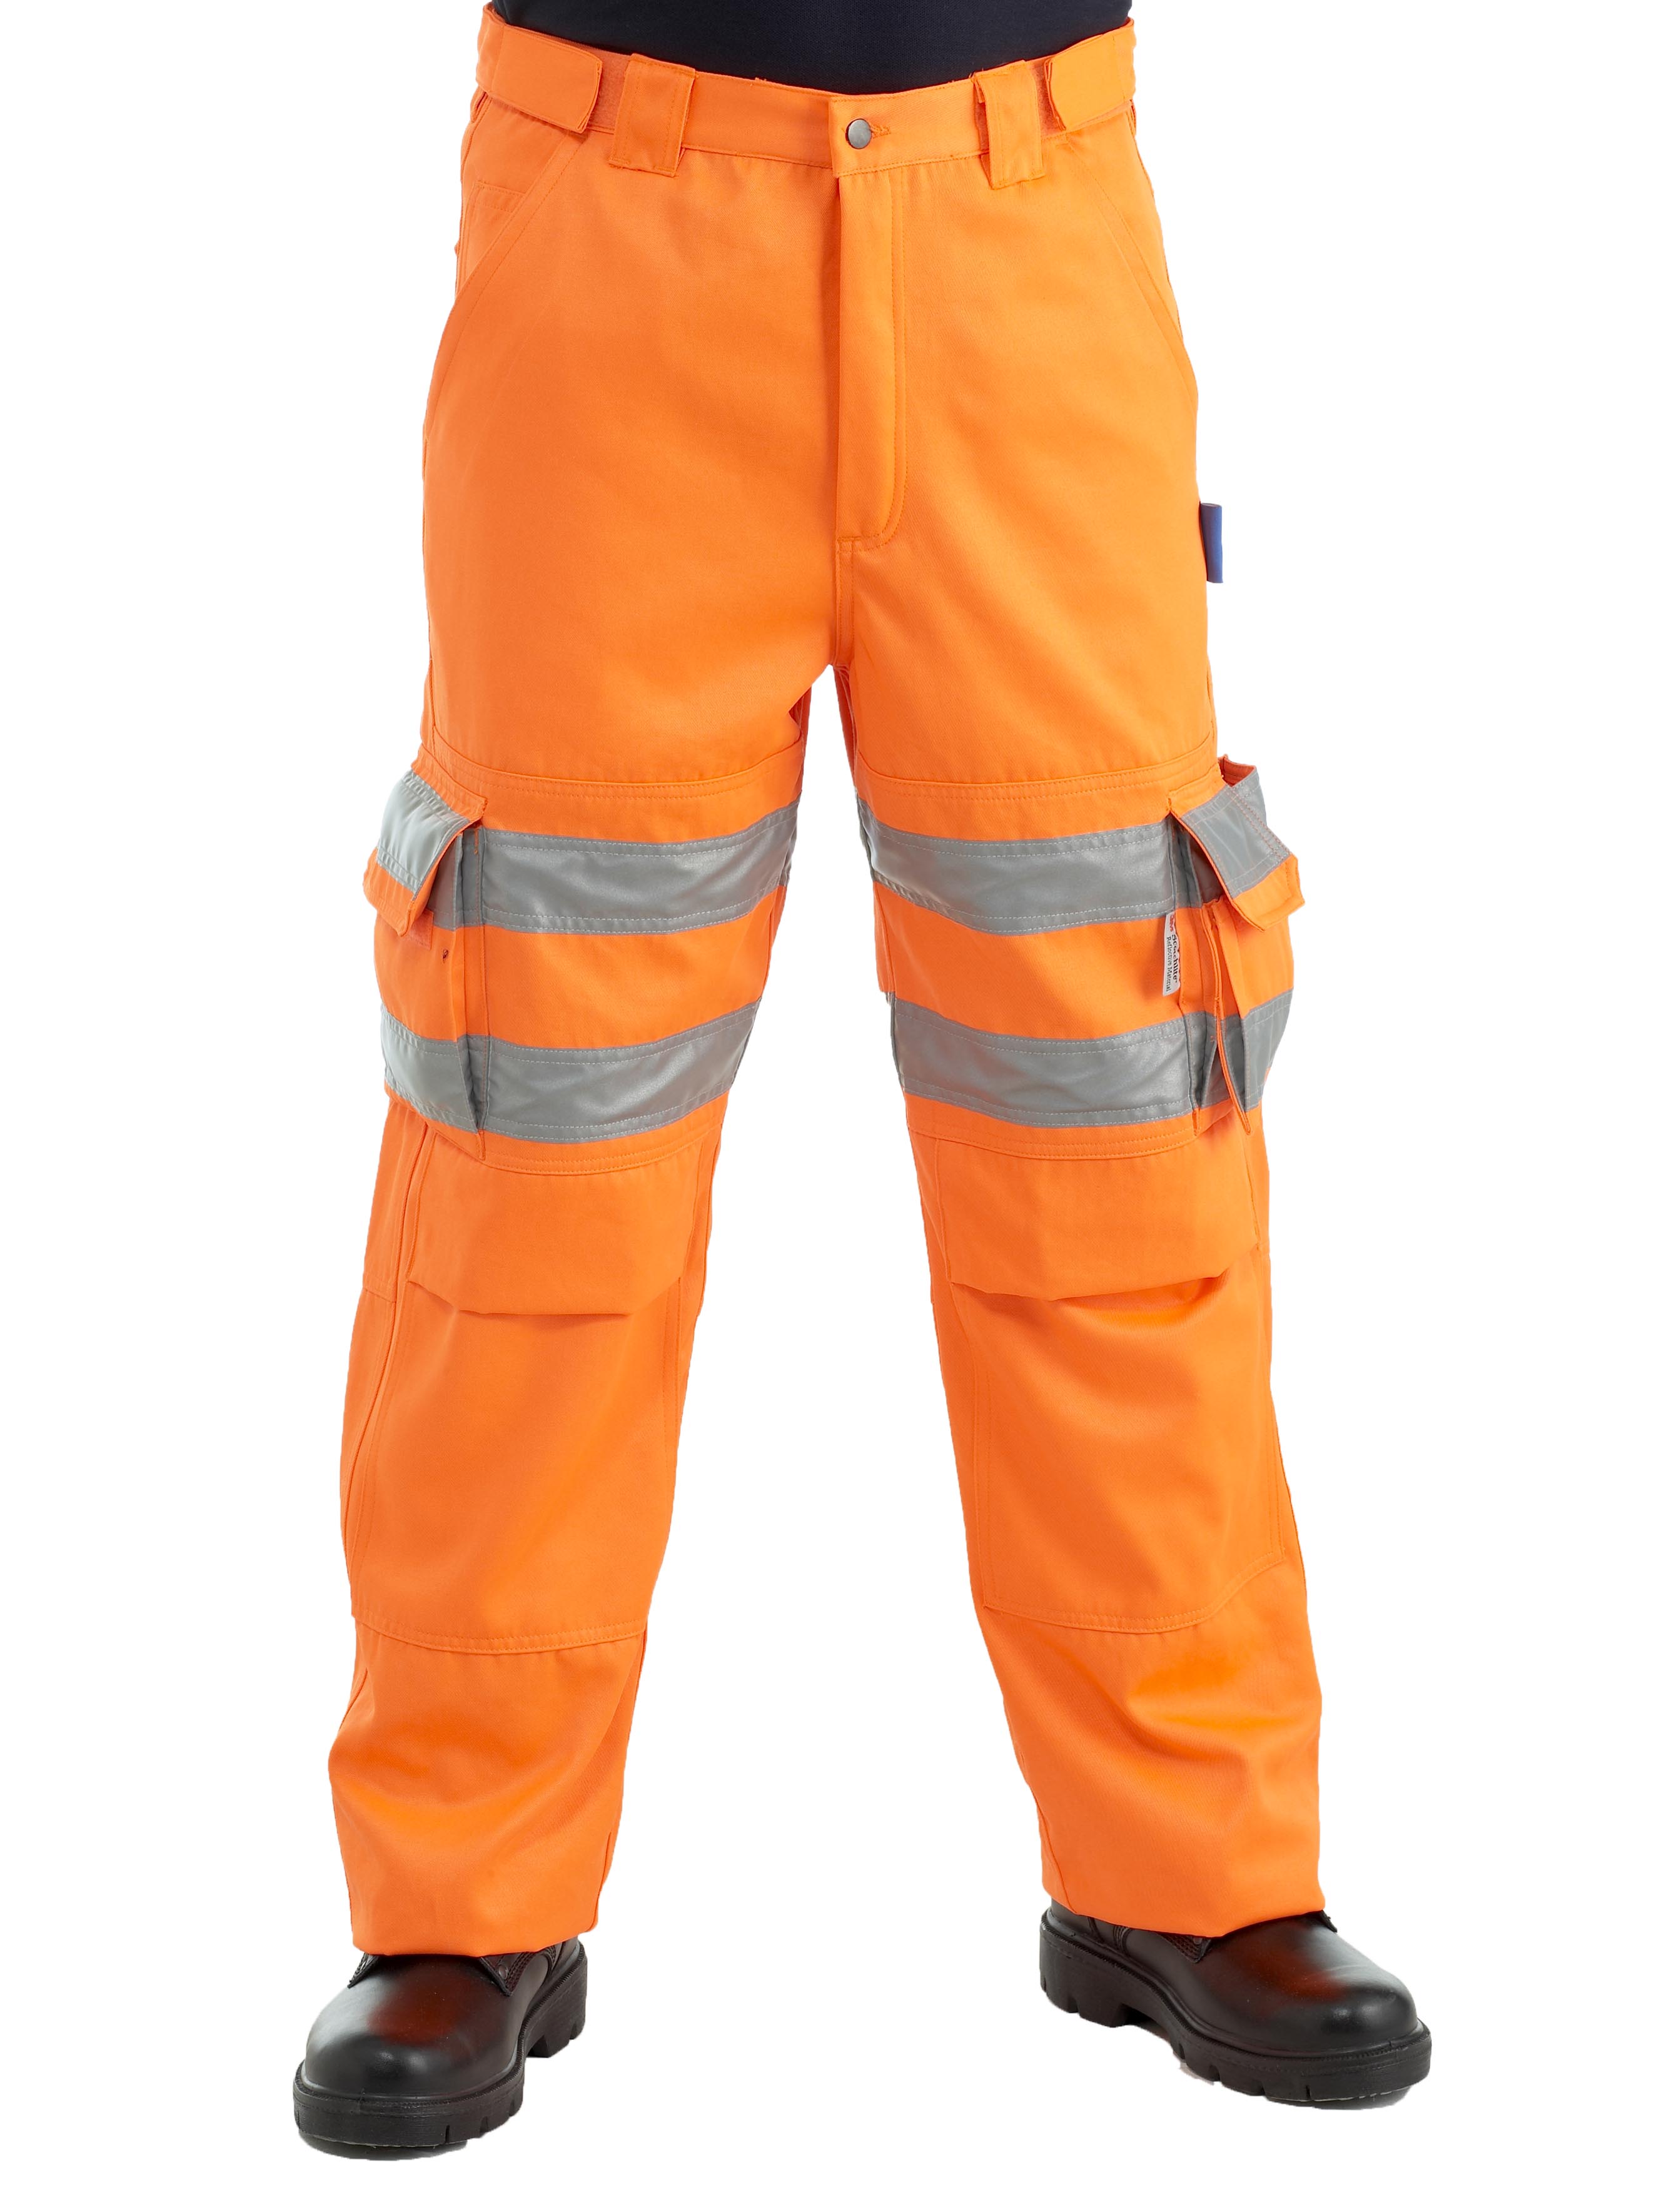 3 Band Hi Viz Work Combat Safety Cargo Trouser Pants Highways Rail Knee Pocket